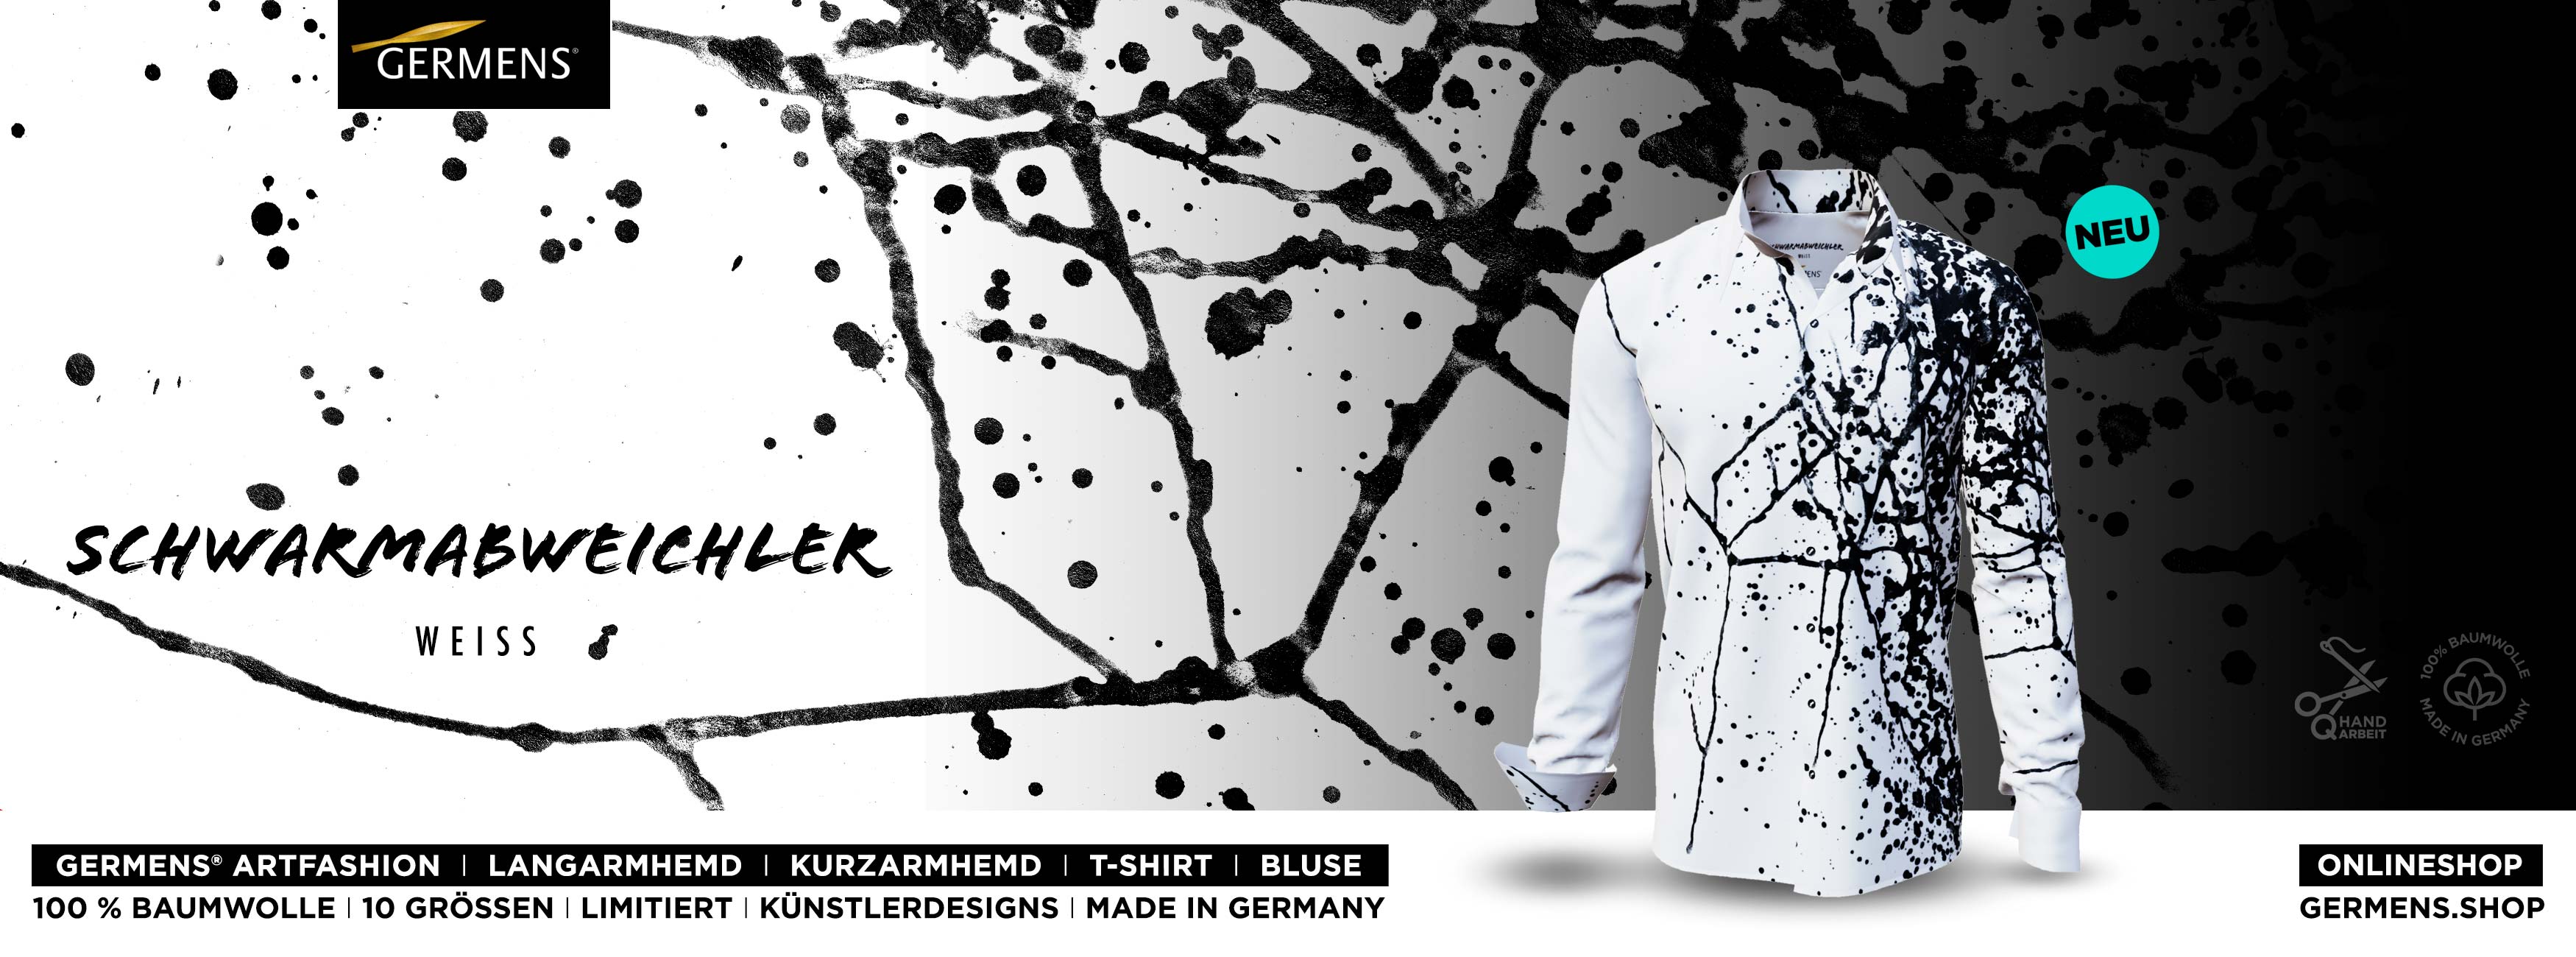 GERMENS® Design SCHWARMABWEICHLER WEISS (220-1) Shirts - Blouses - T-shirts